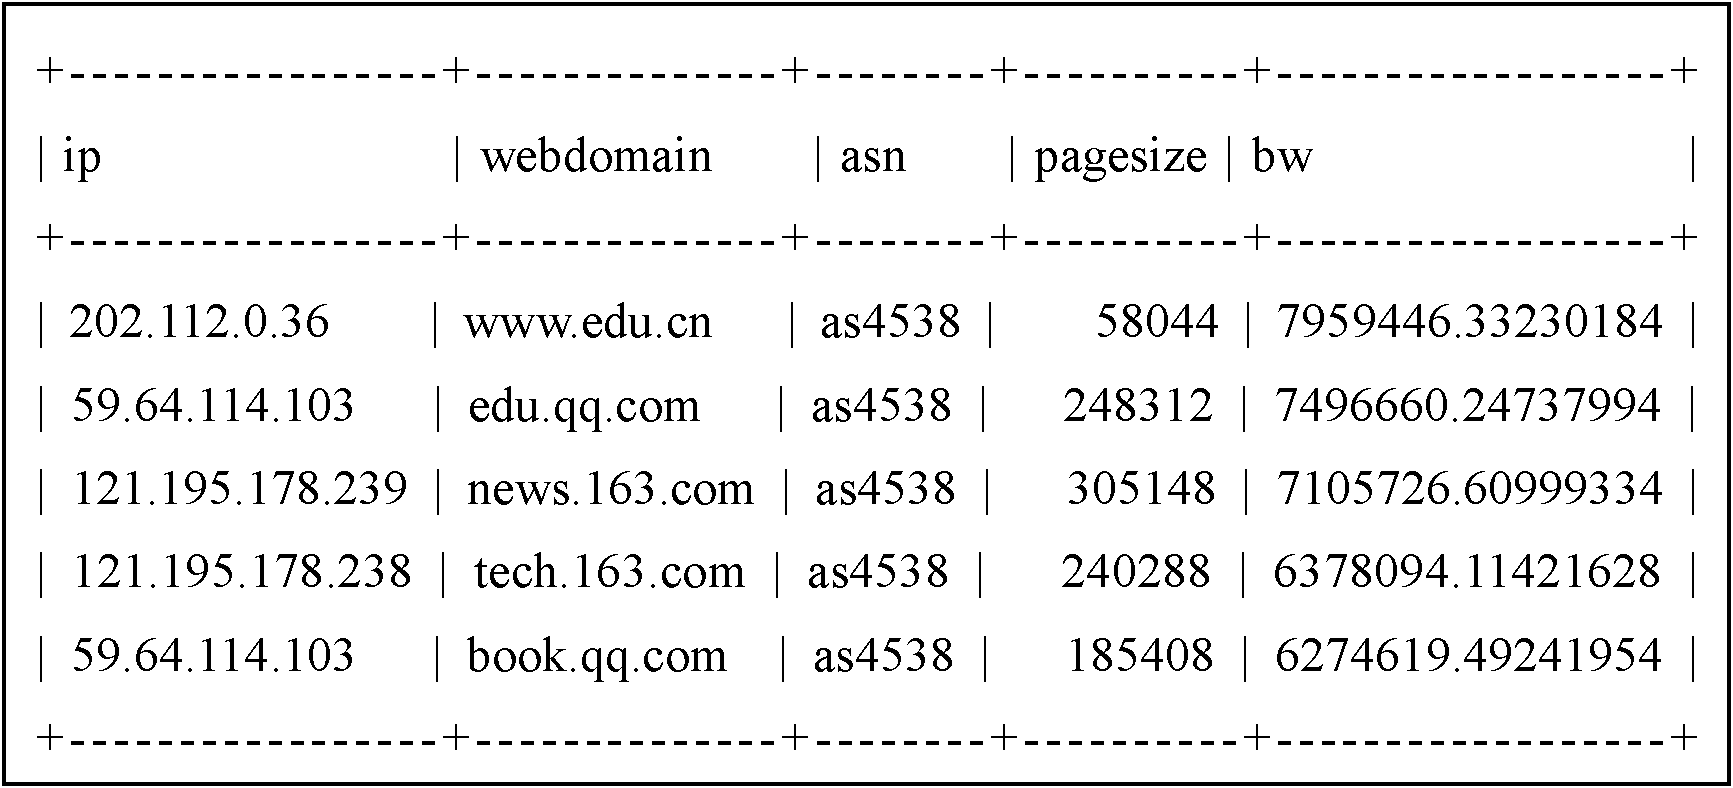 Cross-domain network measuring method based on web servers